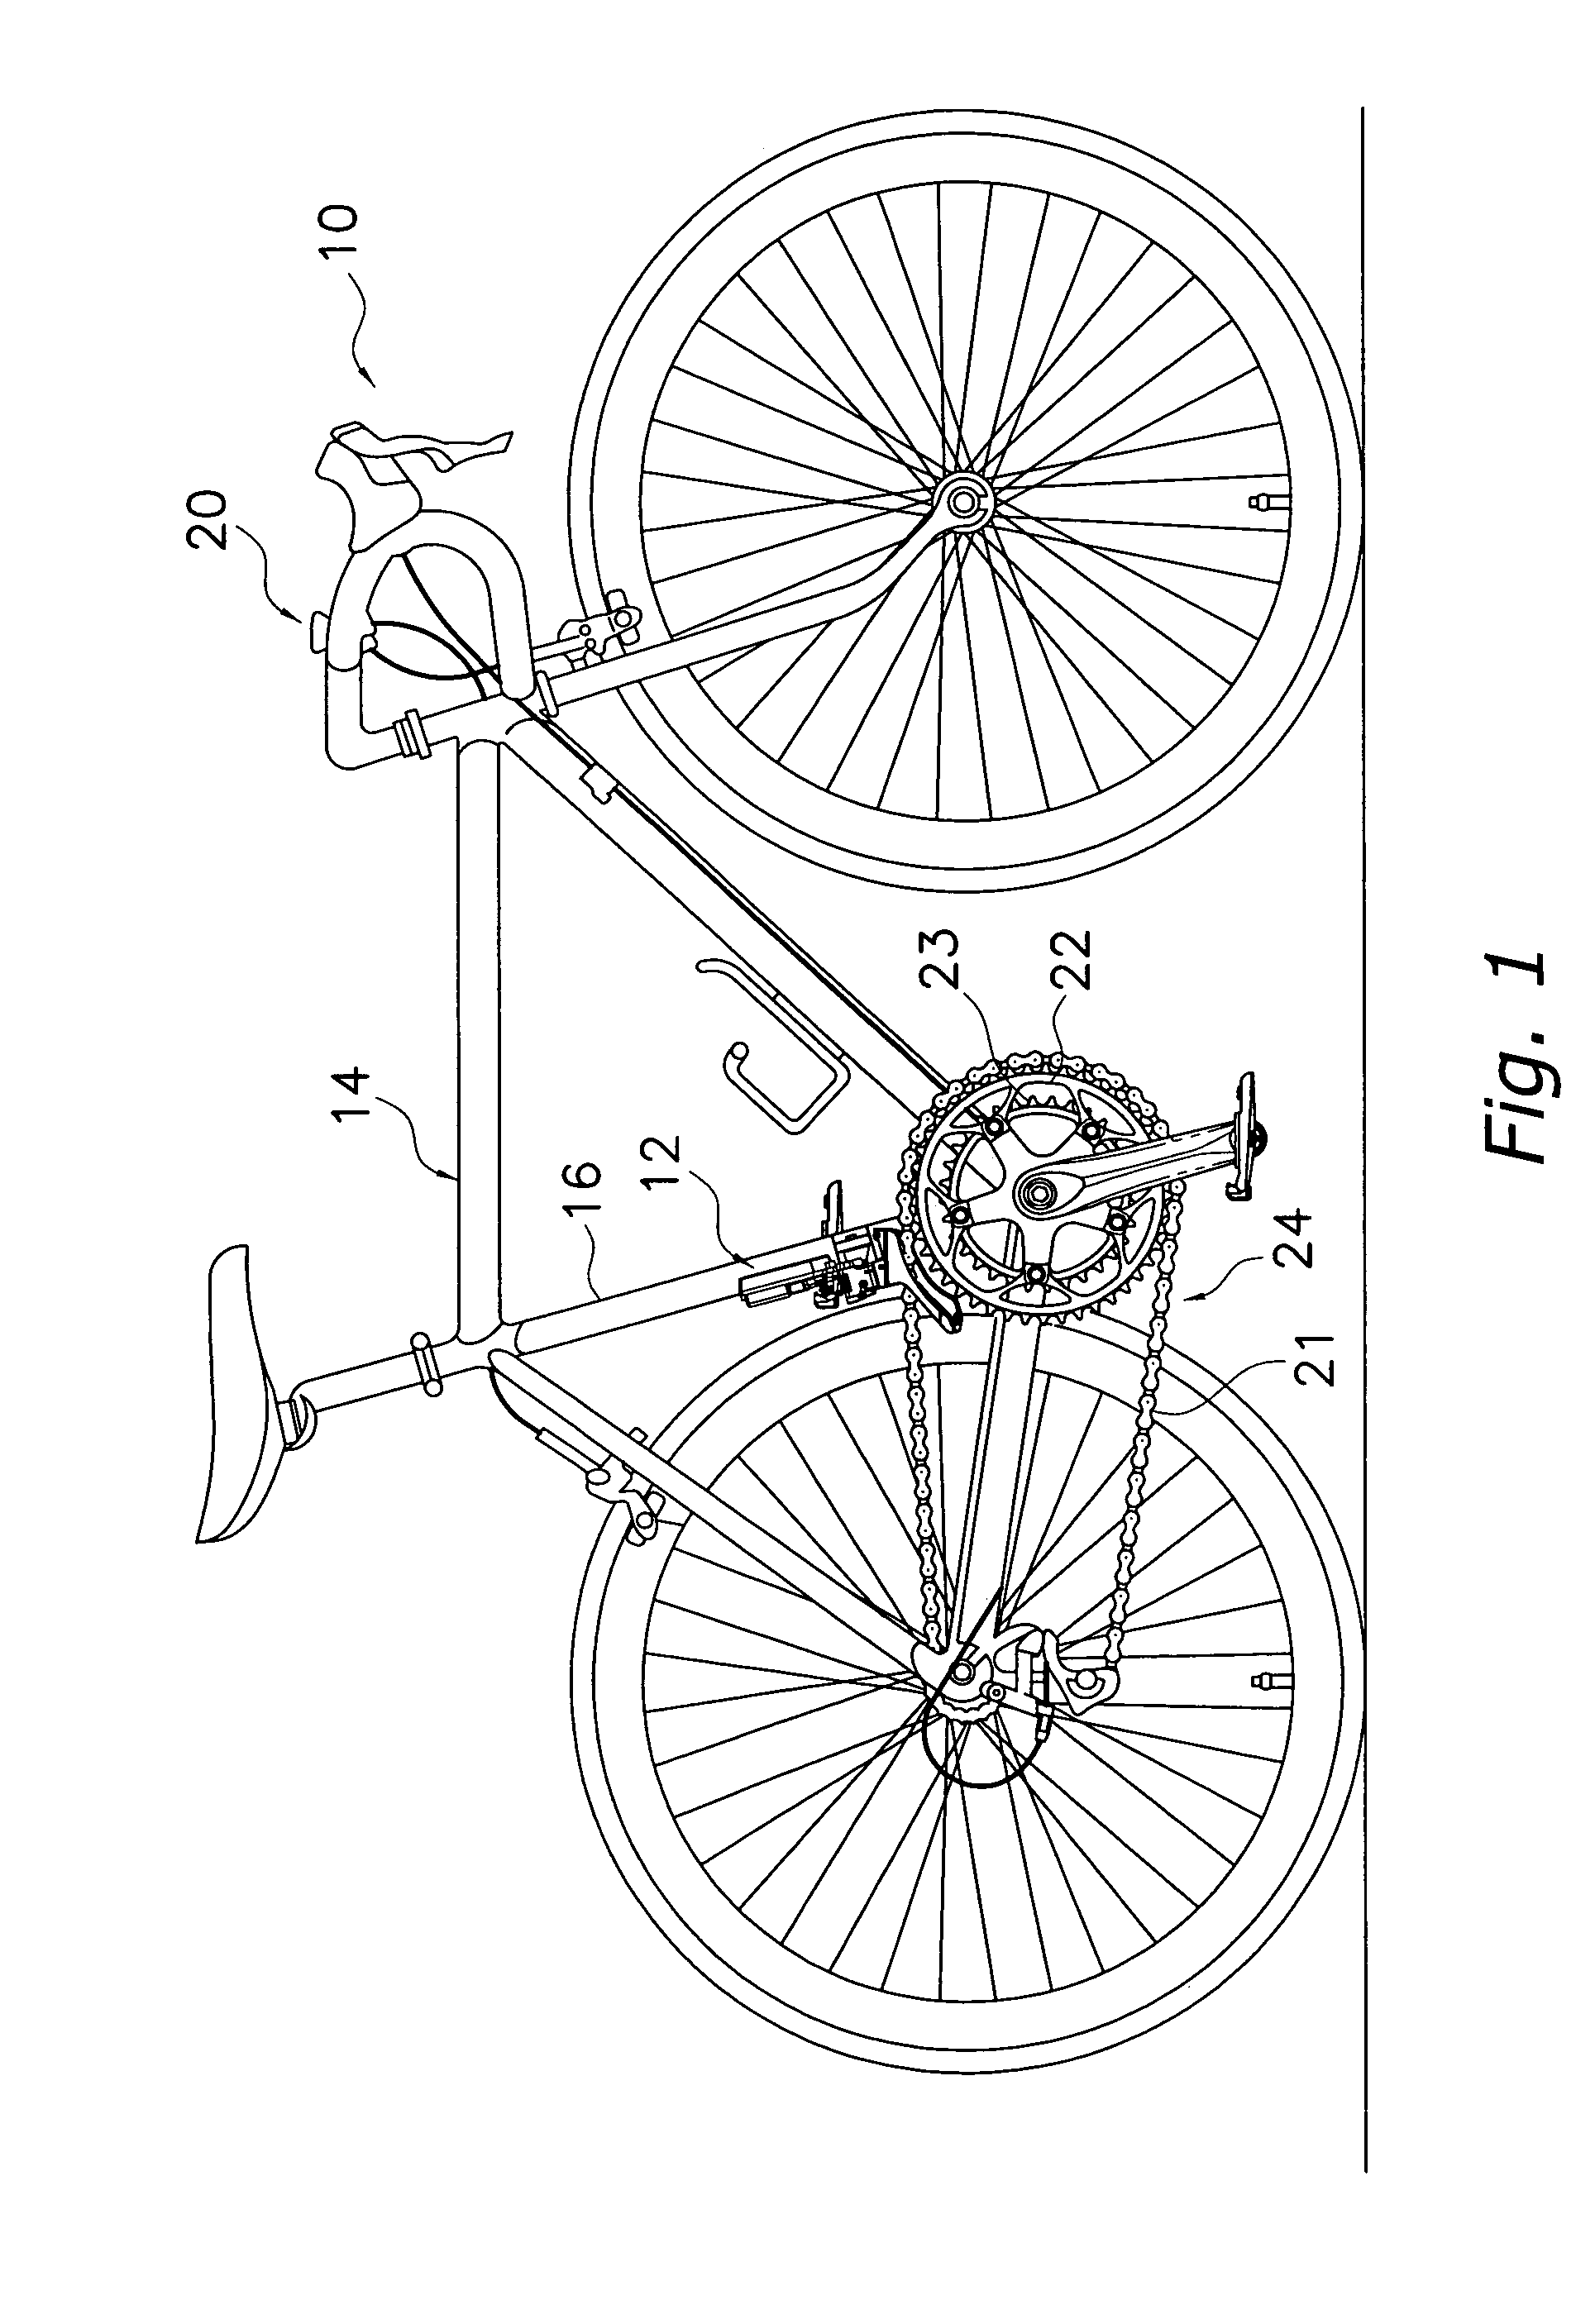 Electric bicycle derailleur